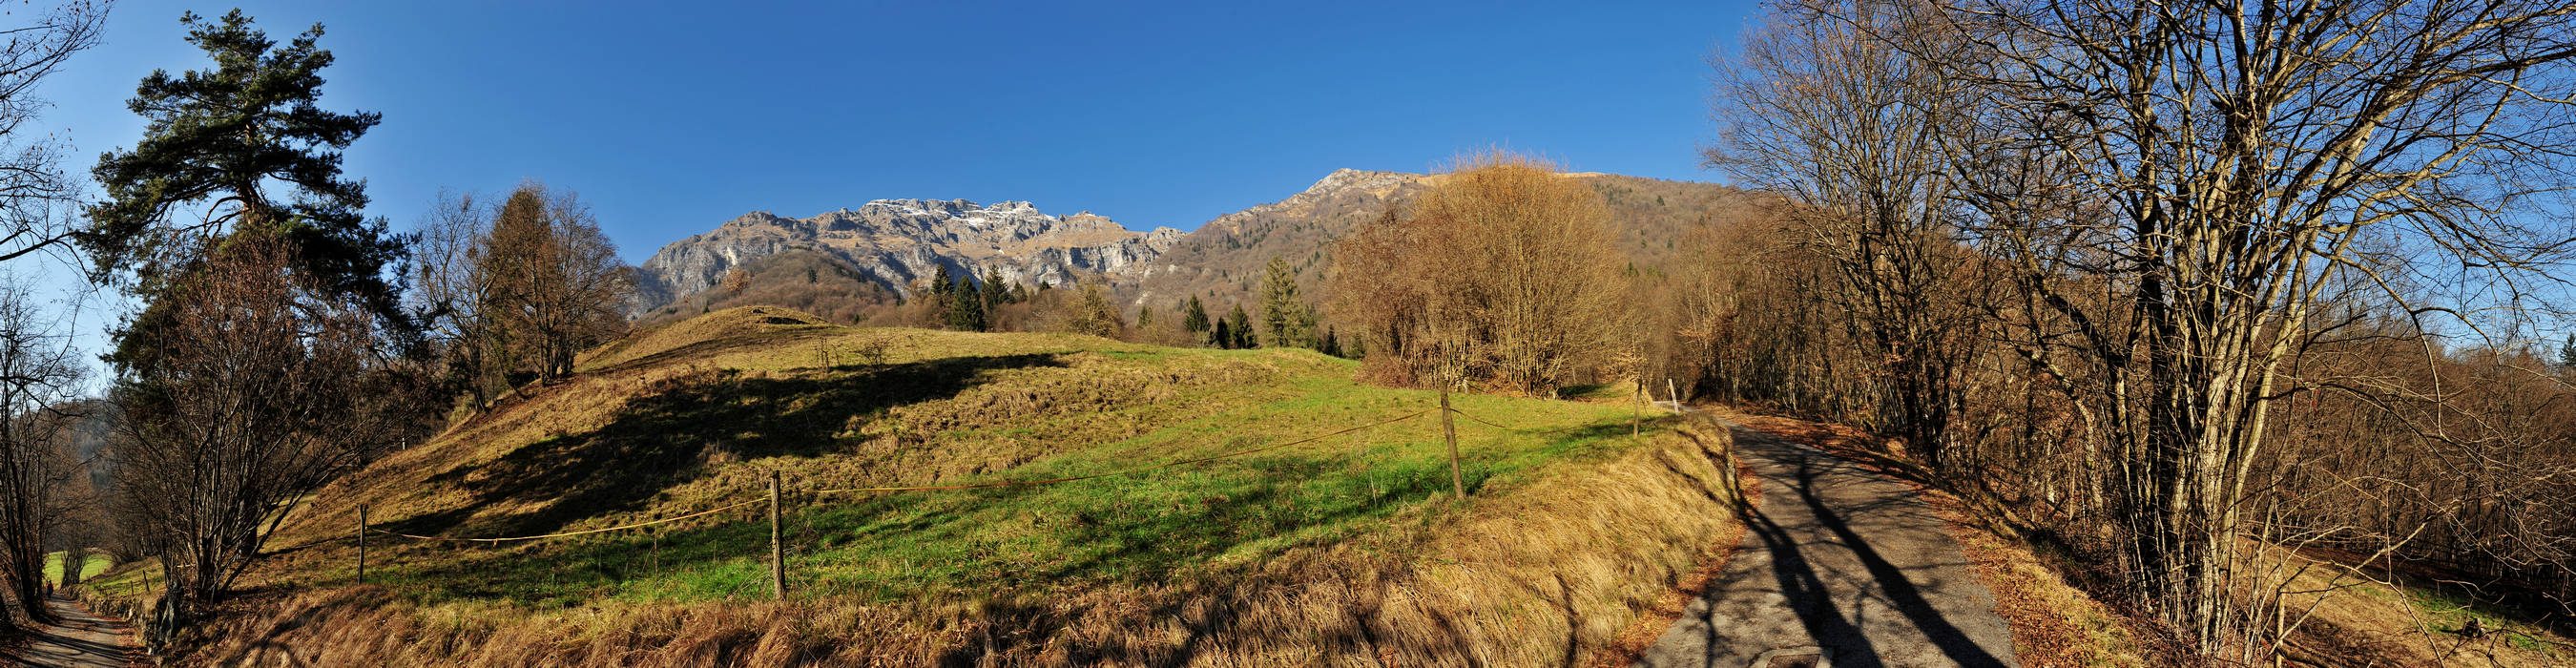 Lasen, monte San Mauro, Parco Nazionale Dolomiti Bellunesi